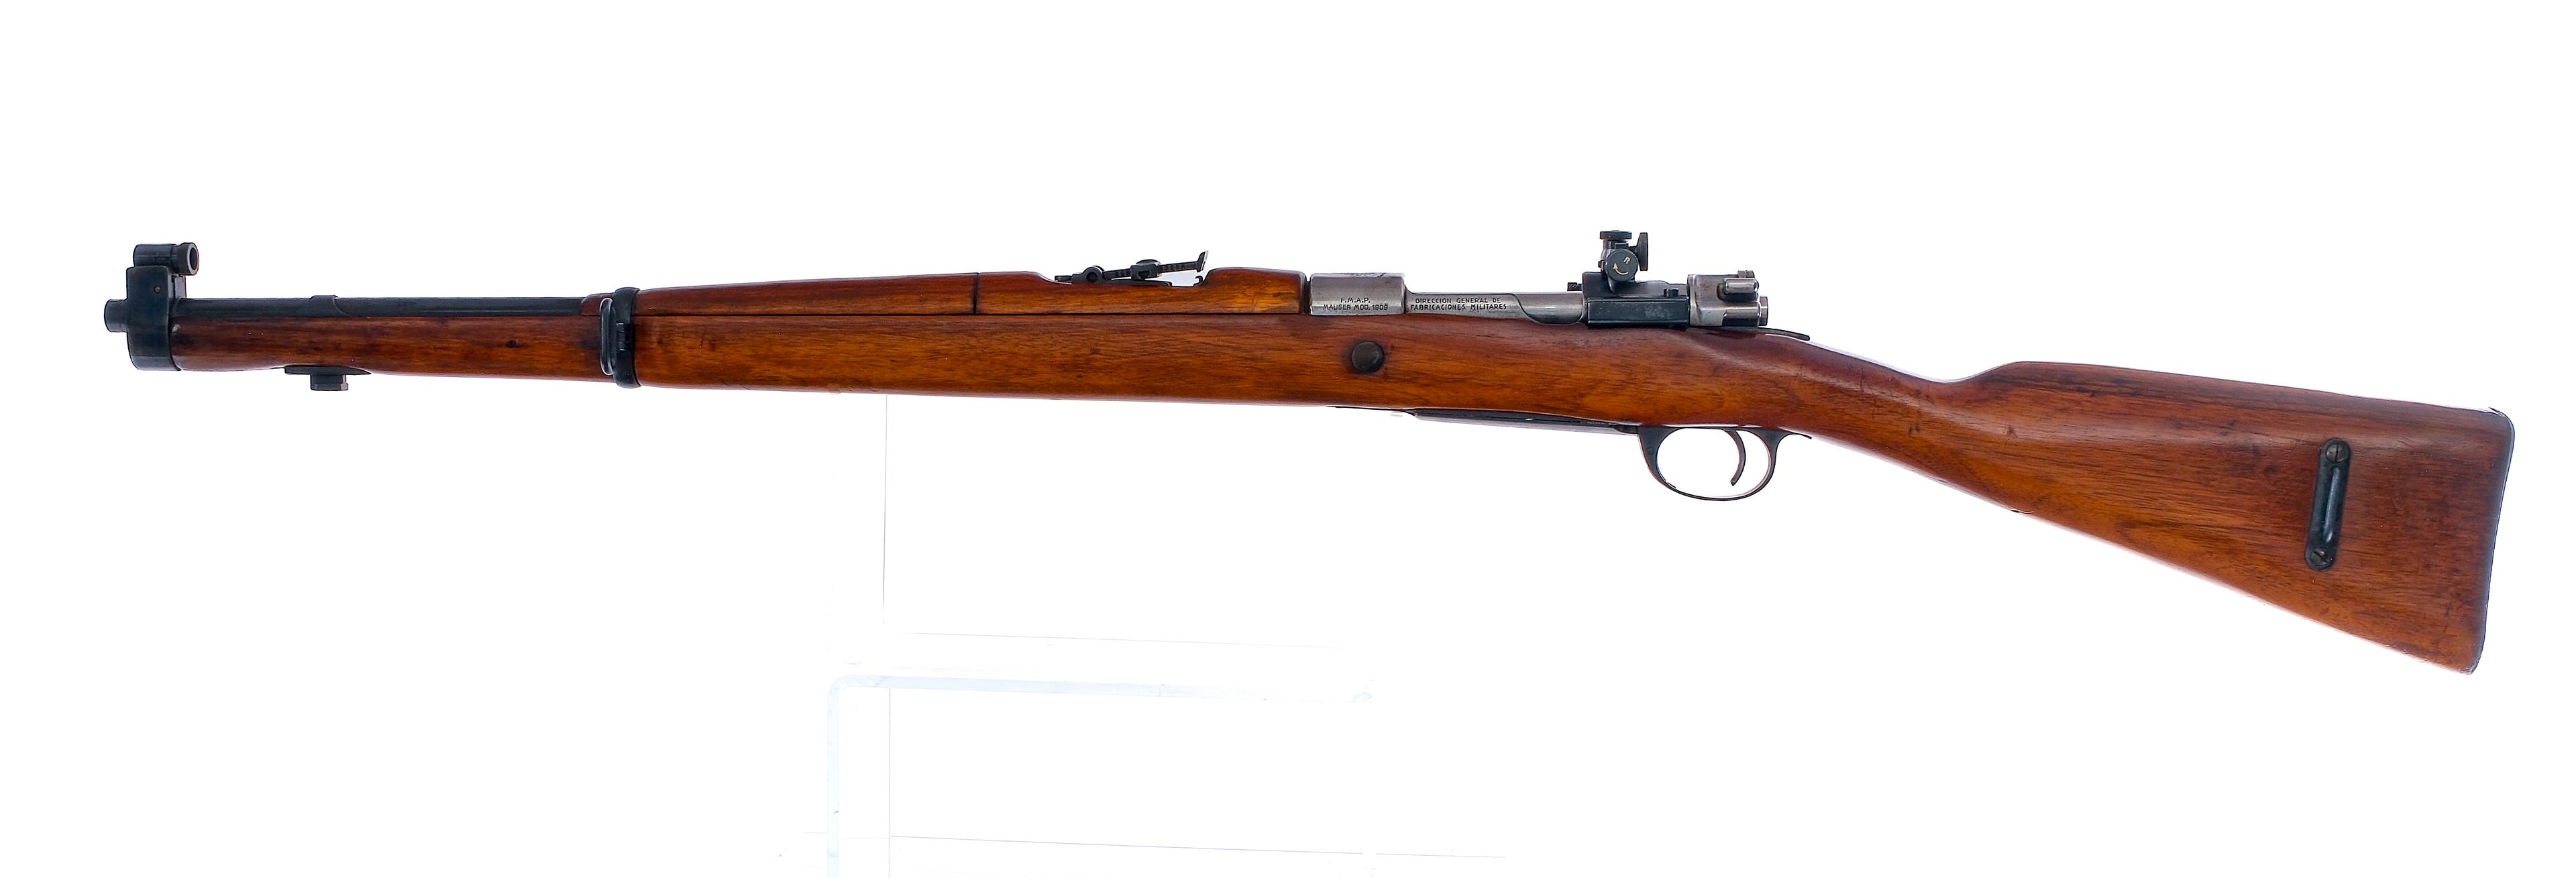 Argentina Mauser 1909 7.65x53mm Bolt Action Rifle